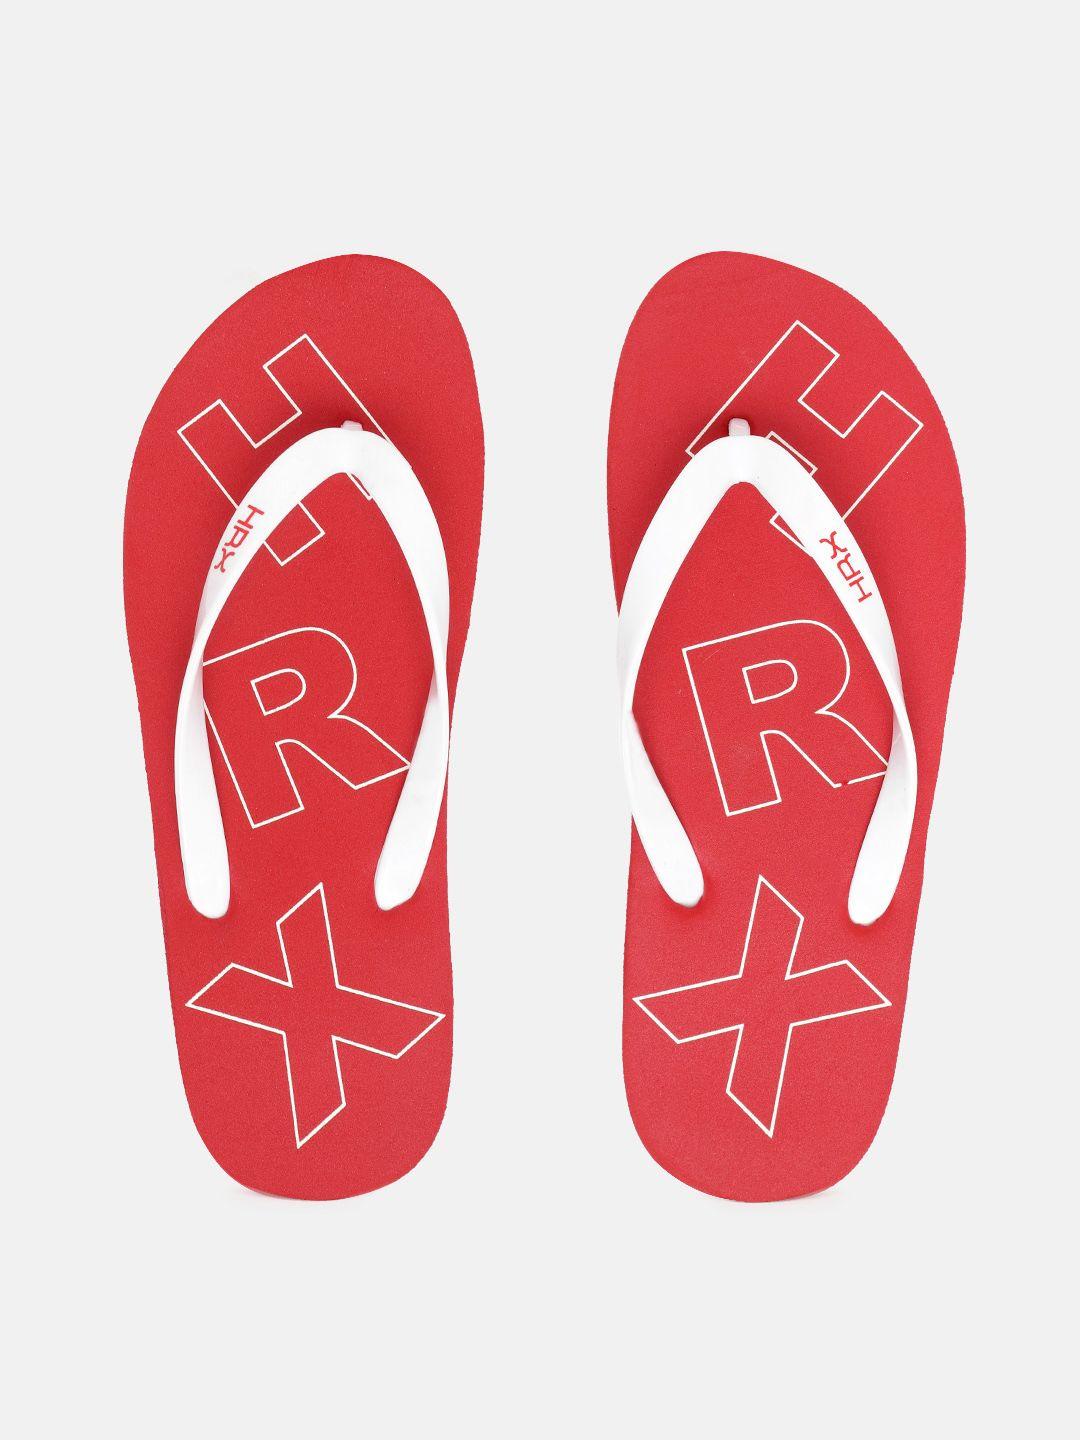 hrx by hrithik roshan men white & red brand logo printed thong flip-flops